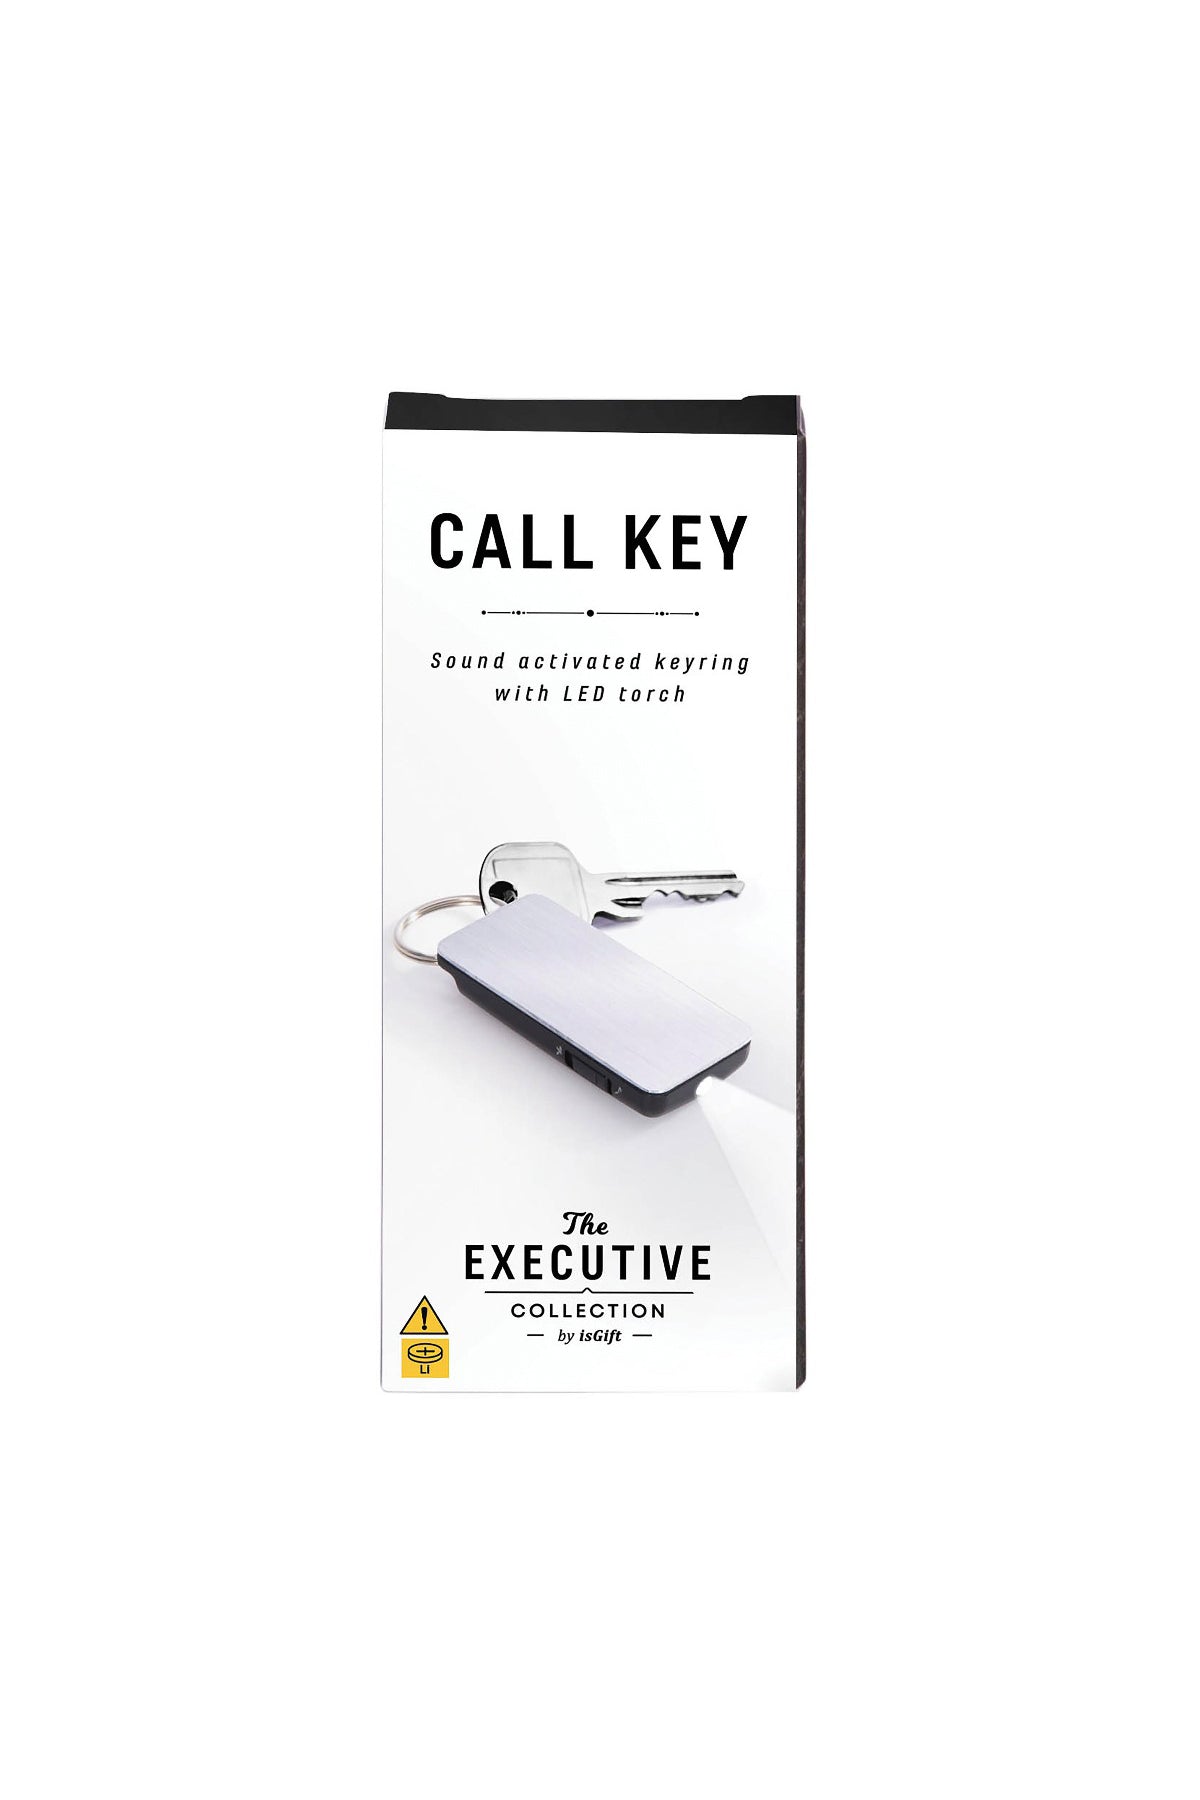 Call Key Keyring